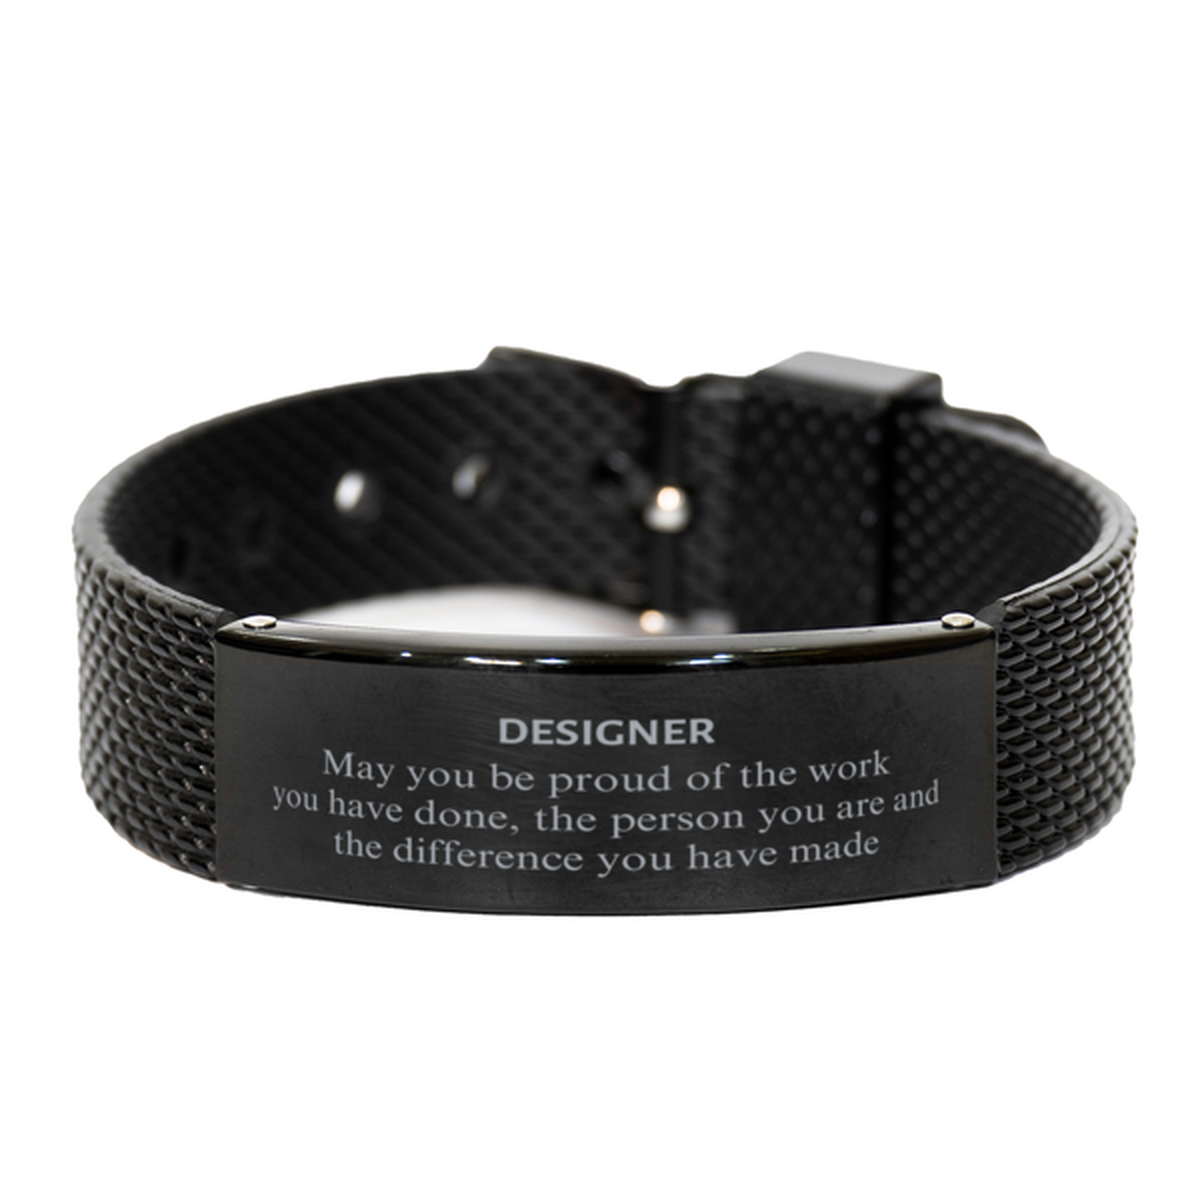 Designer May you be proud of the work you have done, Retirement Designer Black Shark Mesh Bracelet for Colleague Appreciation Gifts Amazing for Designer